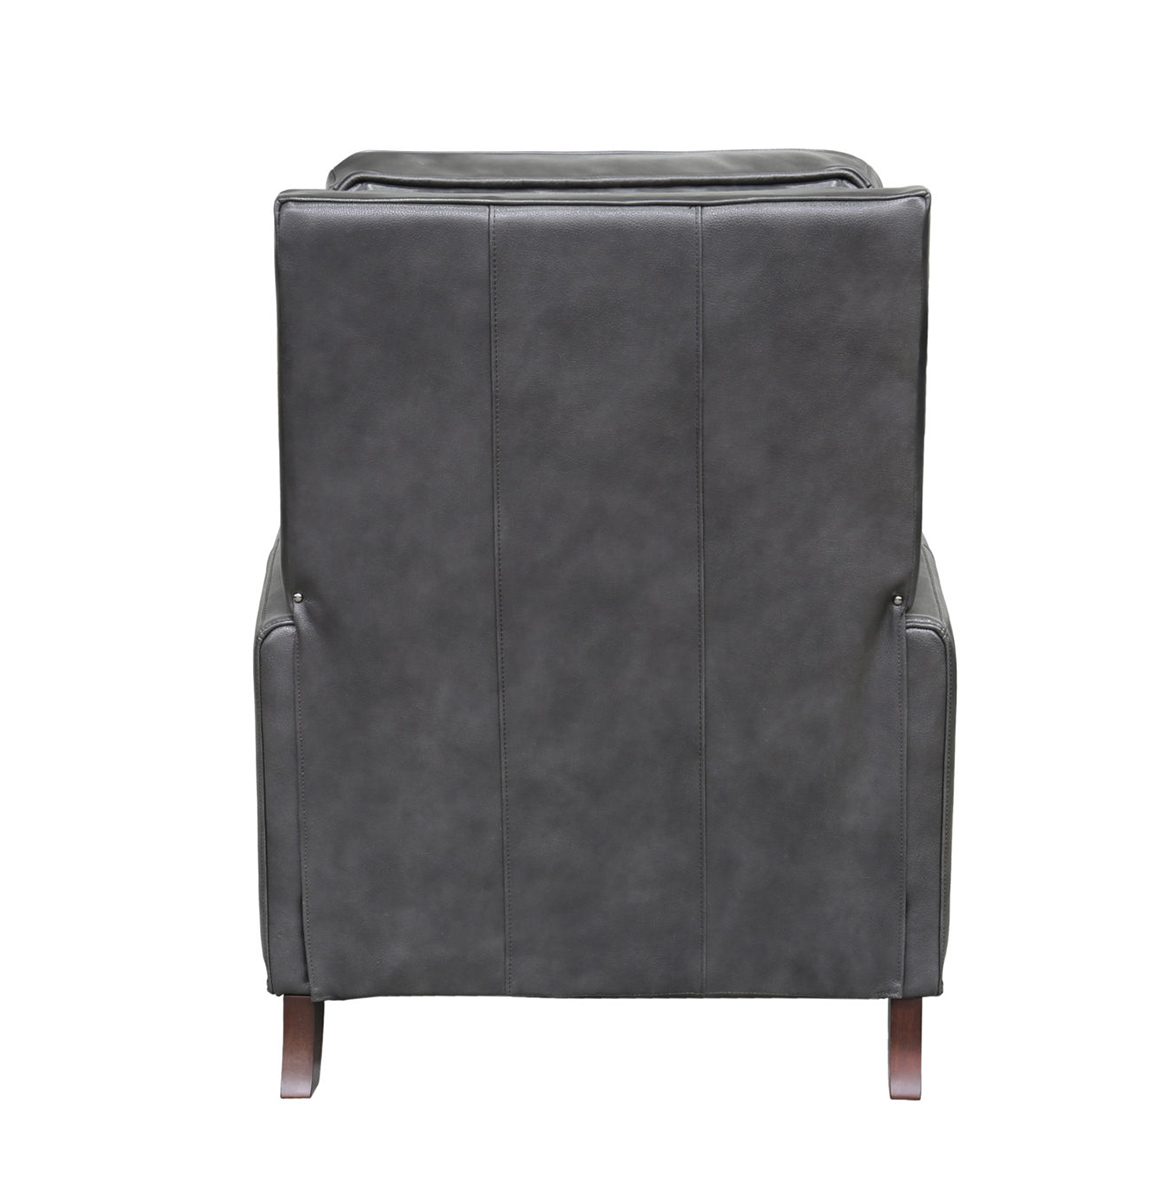 Barcalounger Melrose Recliner Chair - Wrenn Gray/all leather